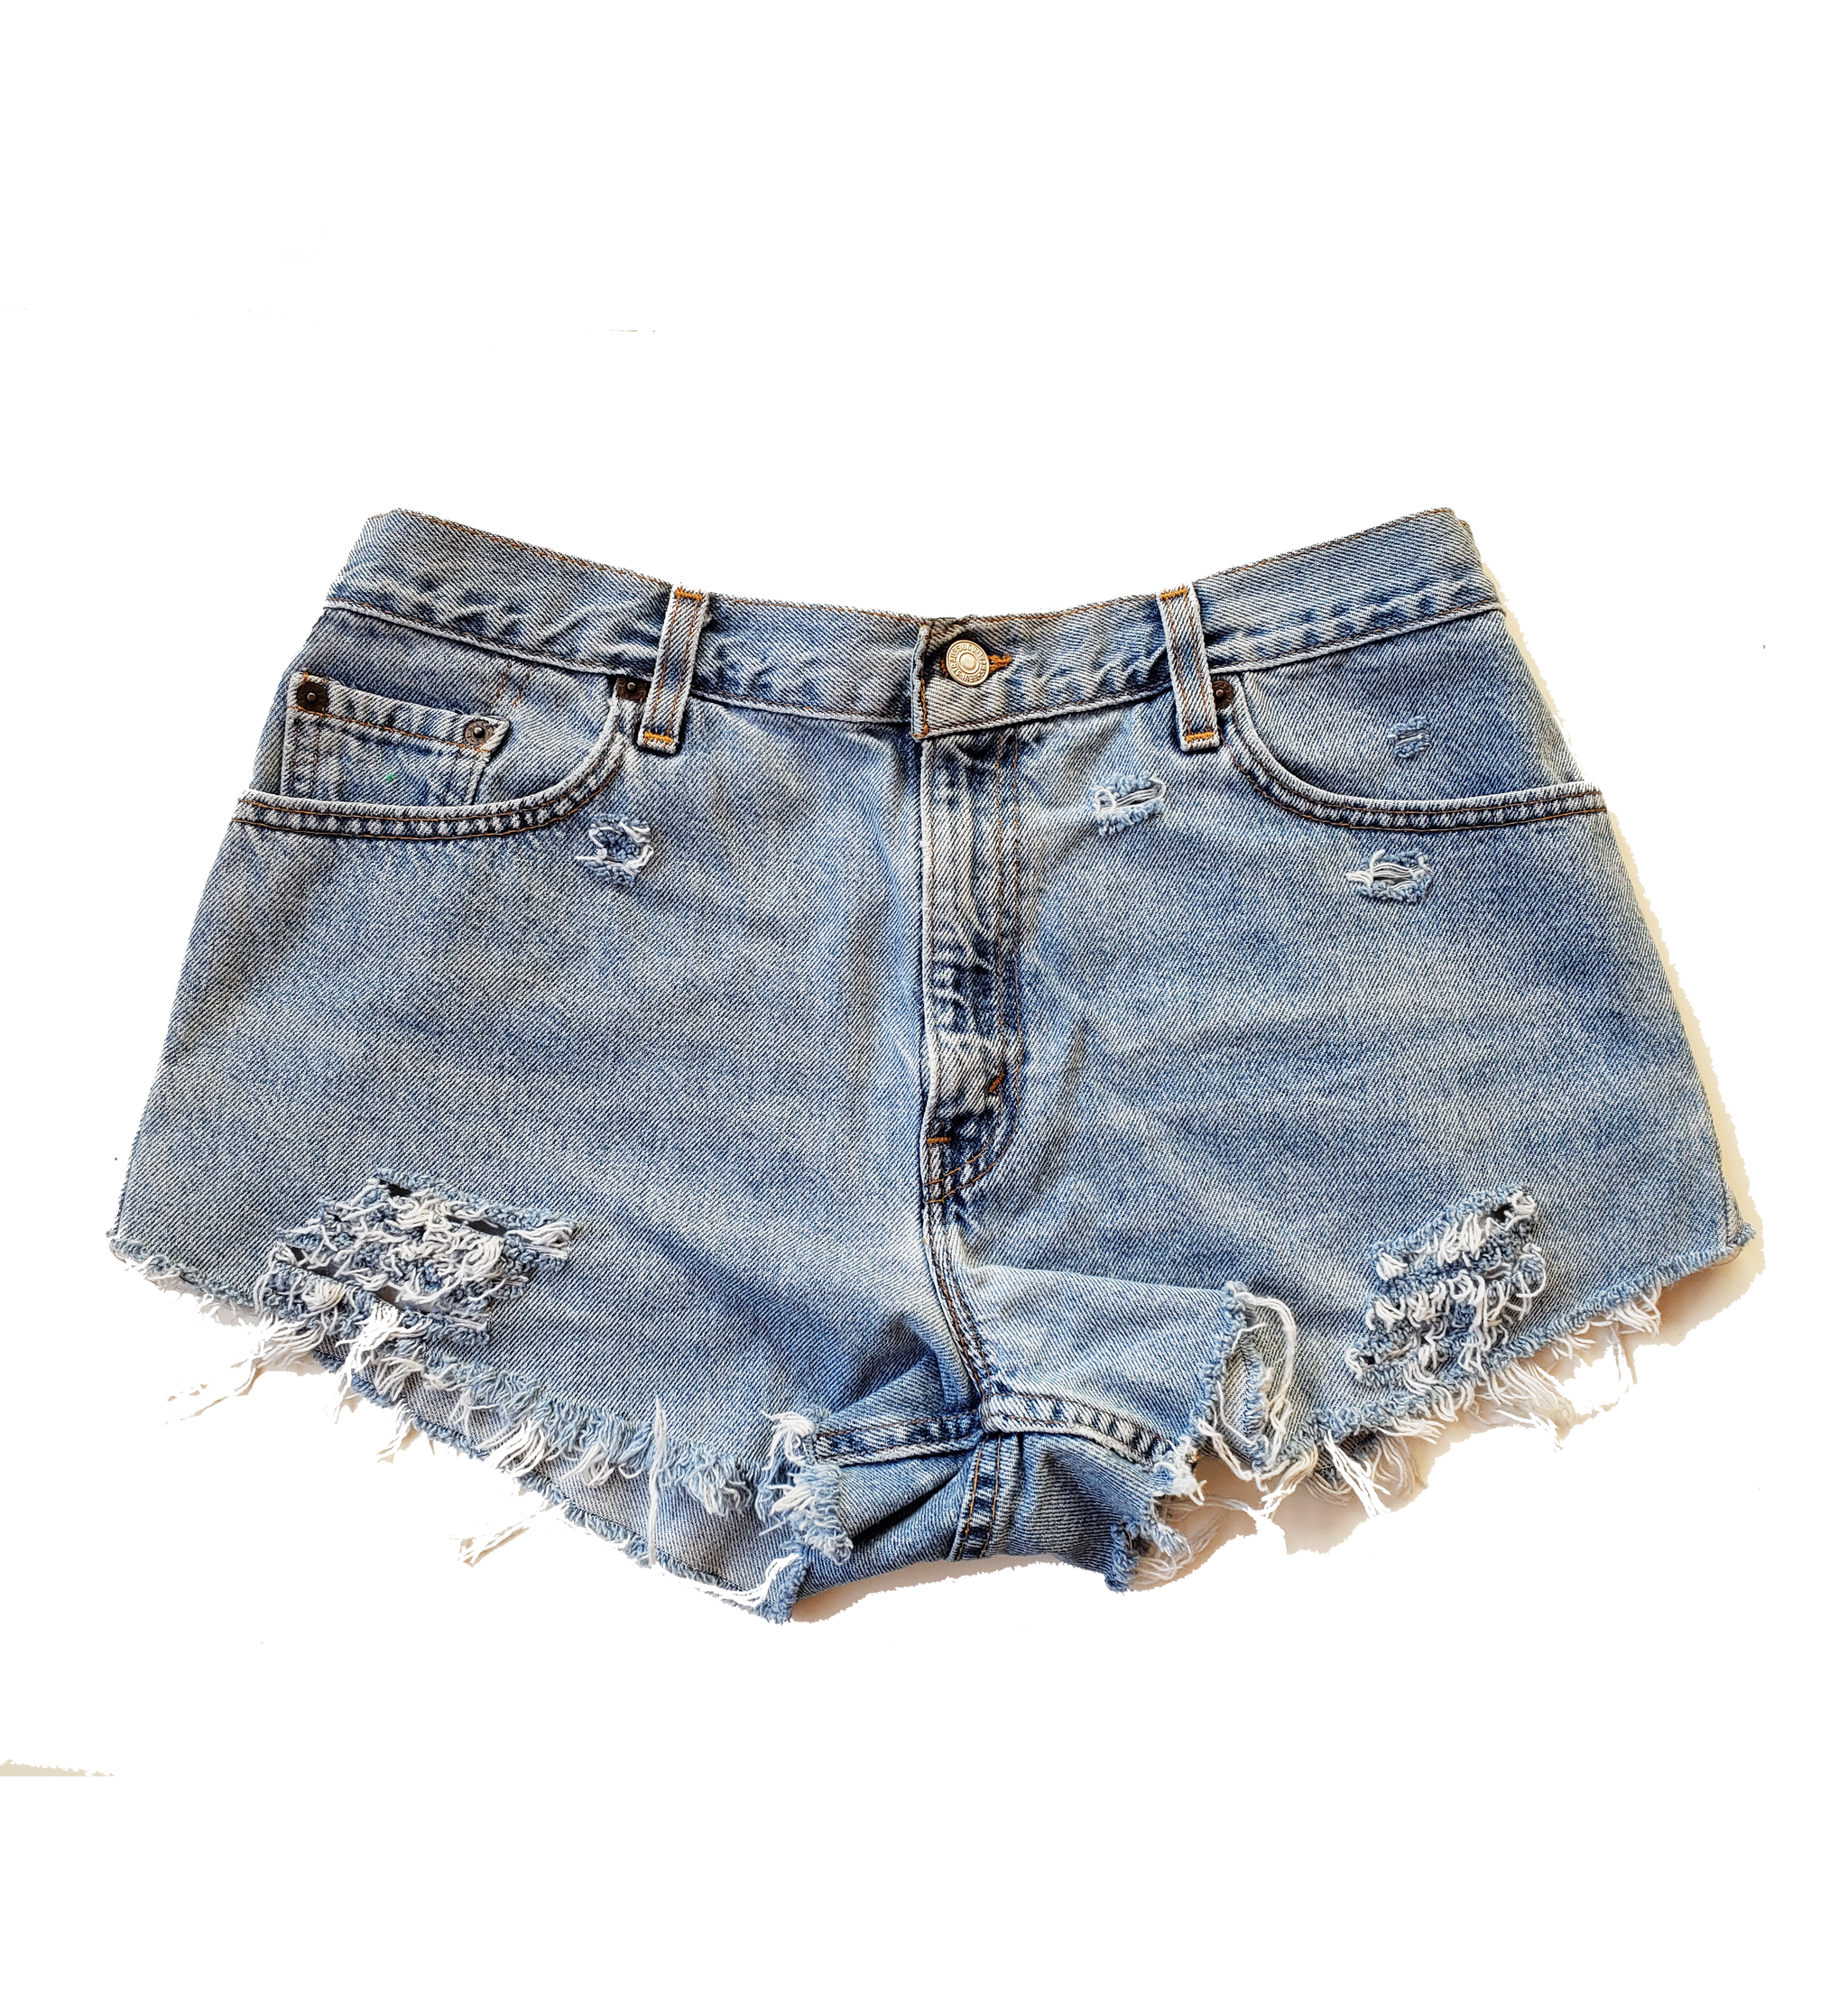 Vintage Levis Denim Shorts 501 Grade A Jorts High Waisted Jean 29 30 32 34  36 | eBay